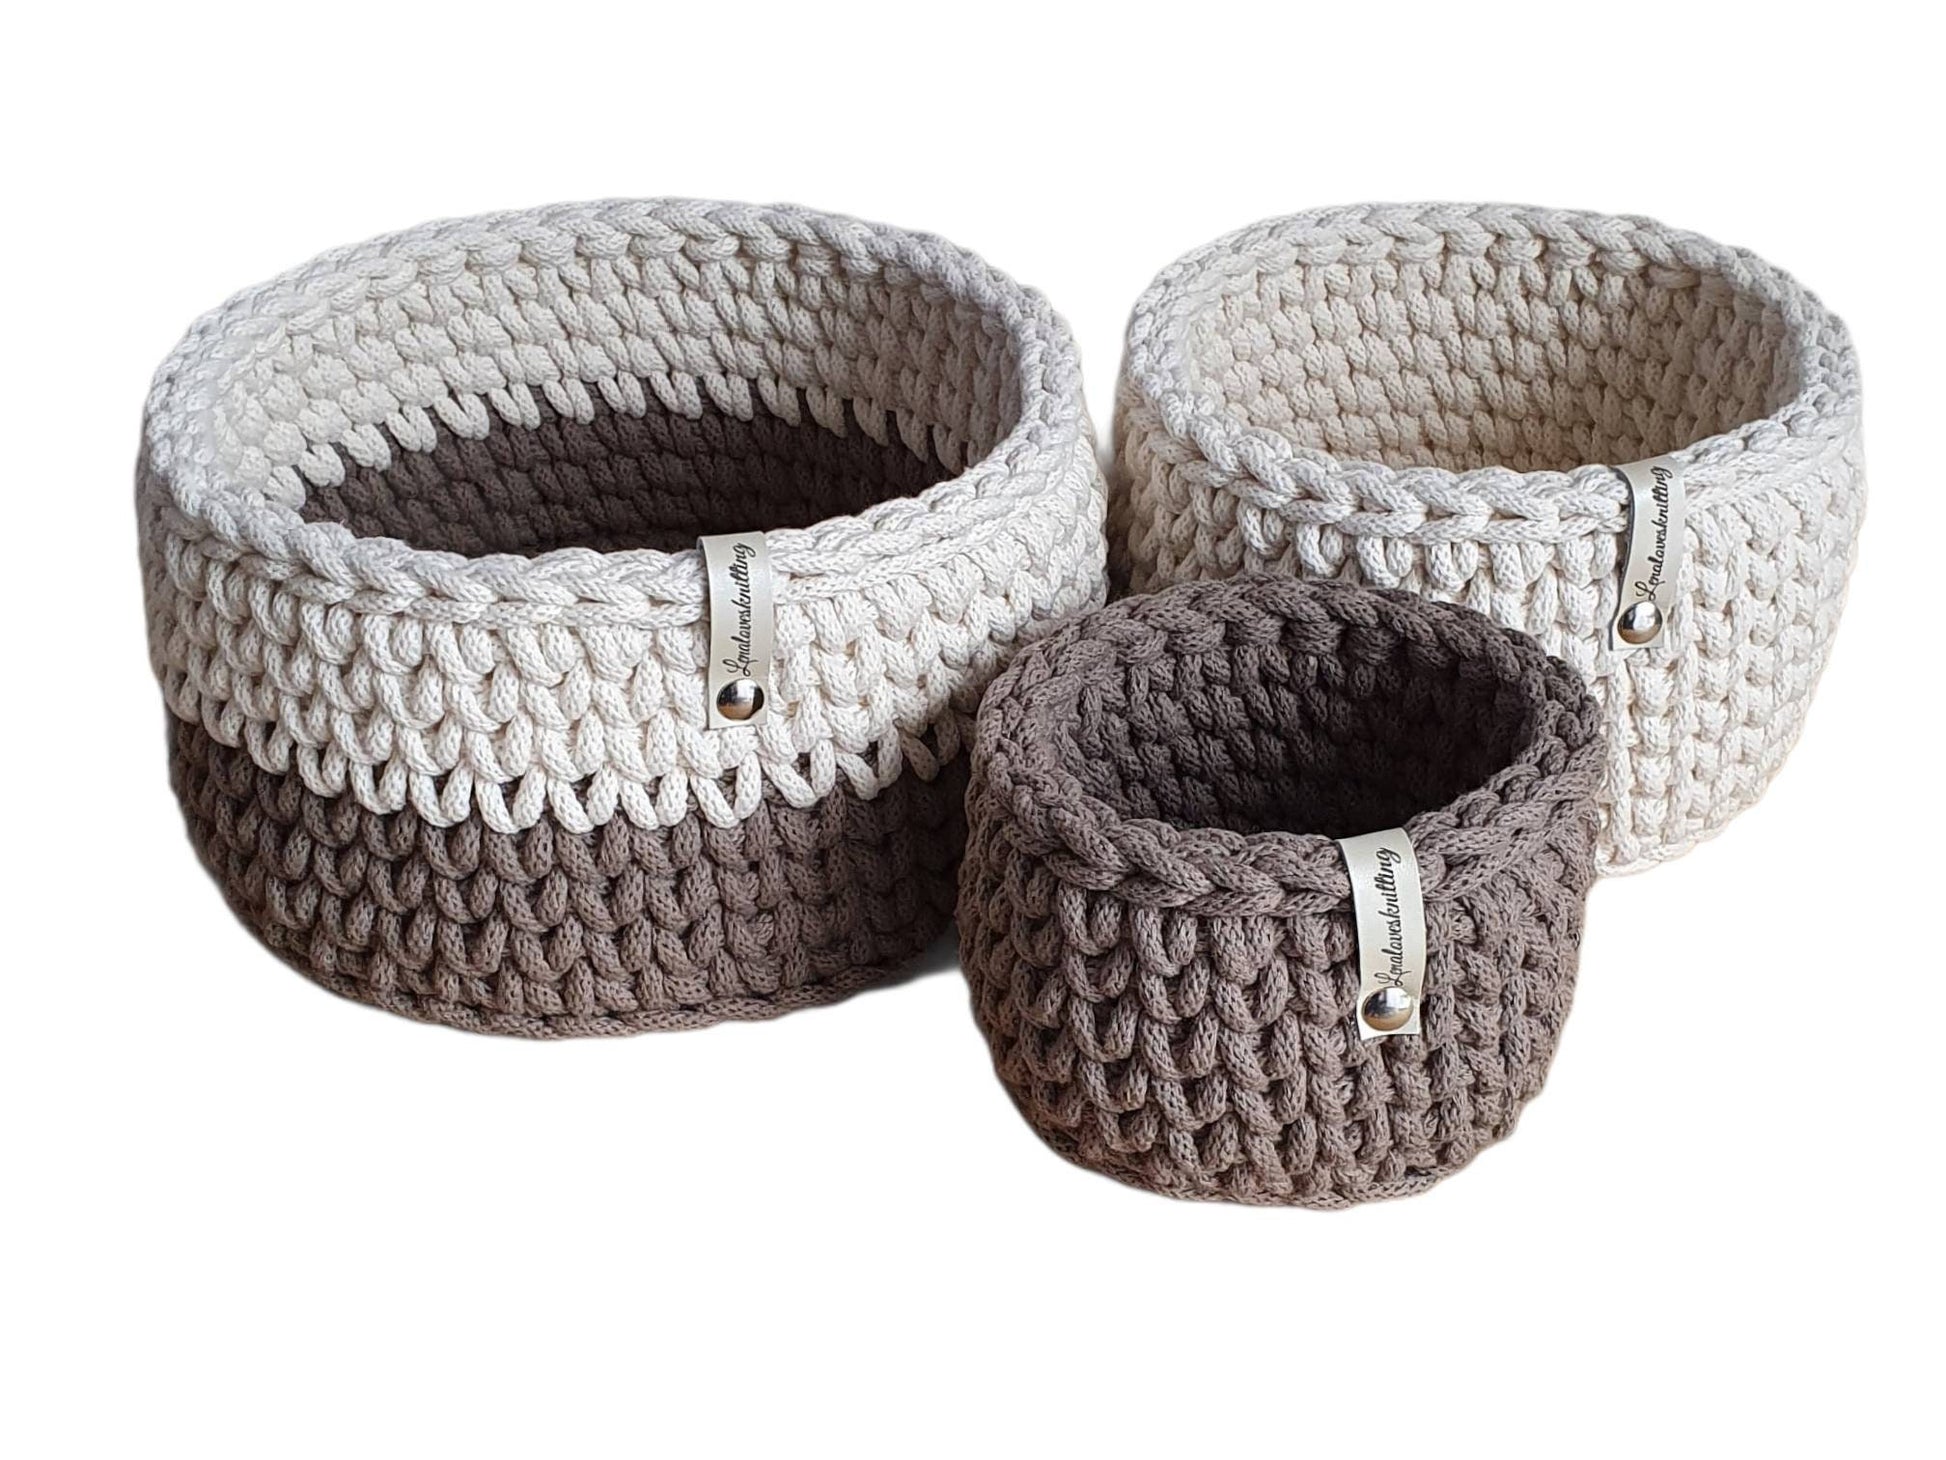 of shower Set lenalovesknitting – crocheted gift from baskets cotton idea baby cord 3